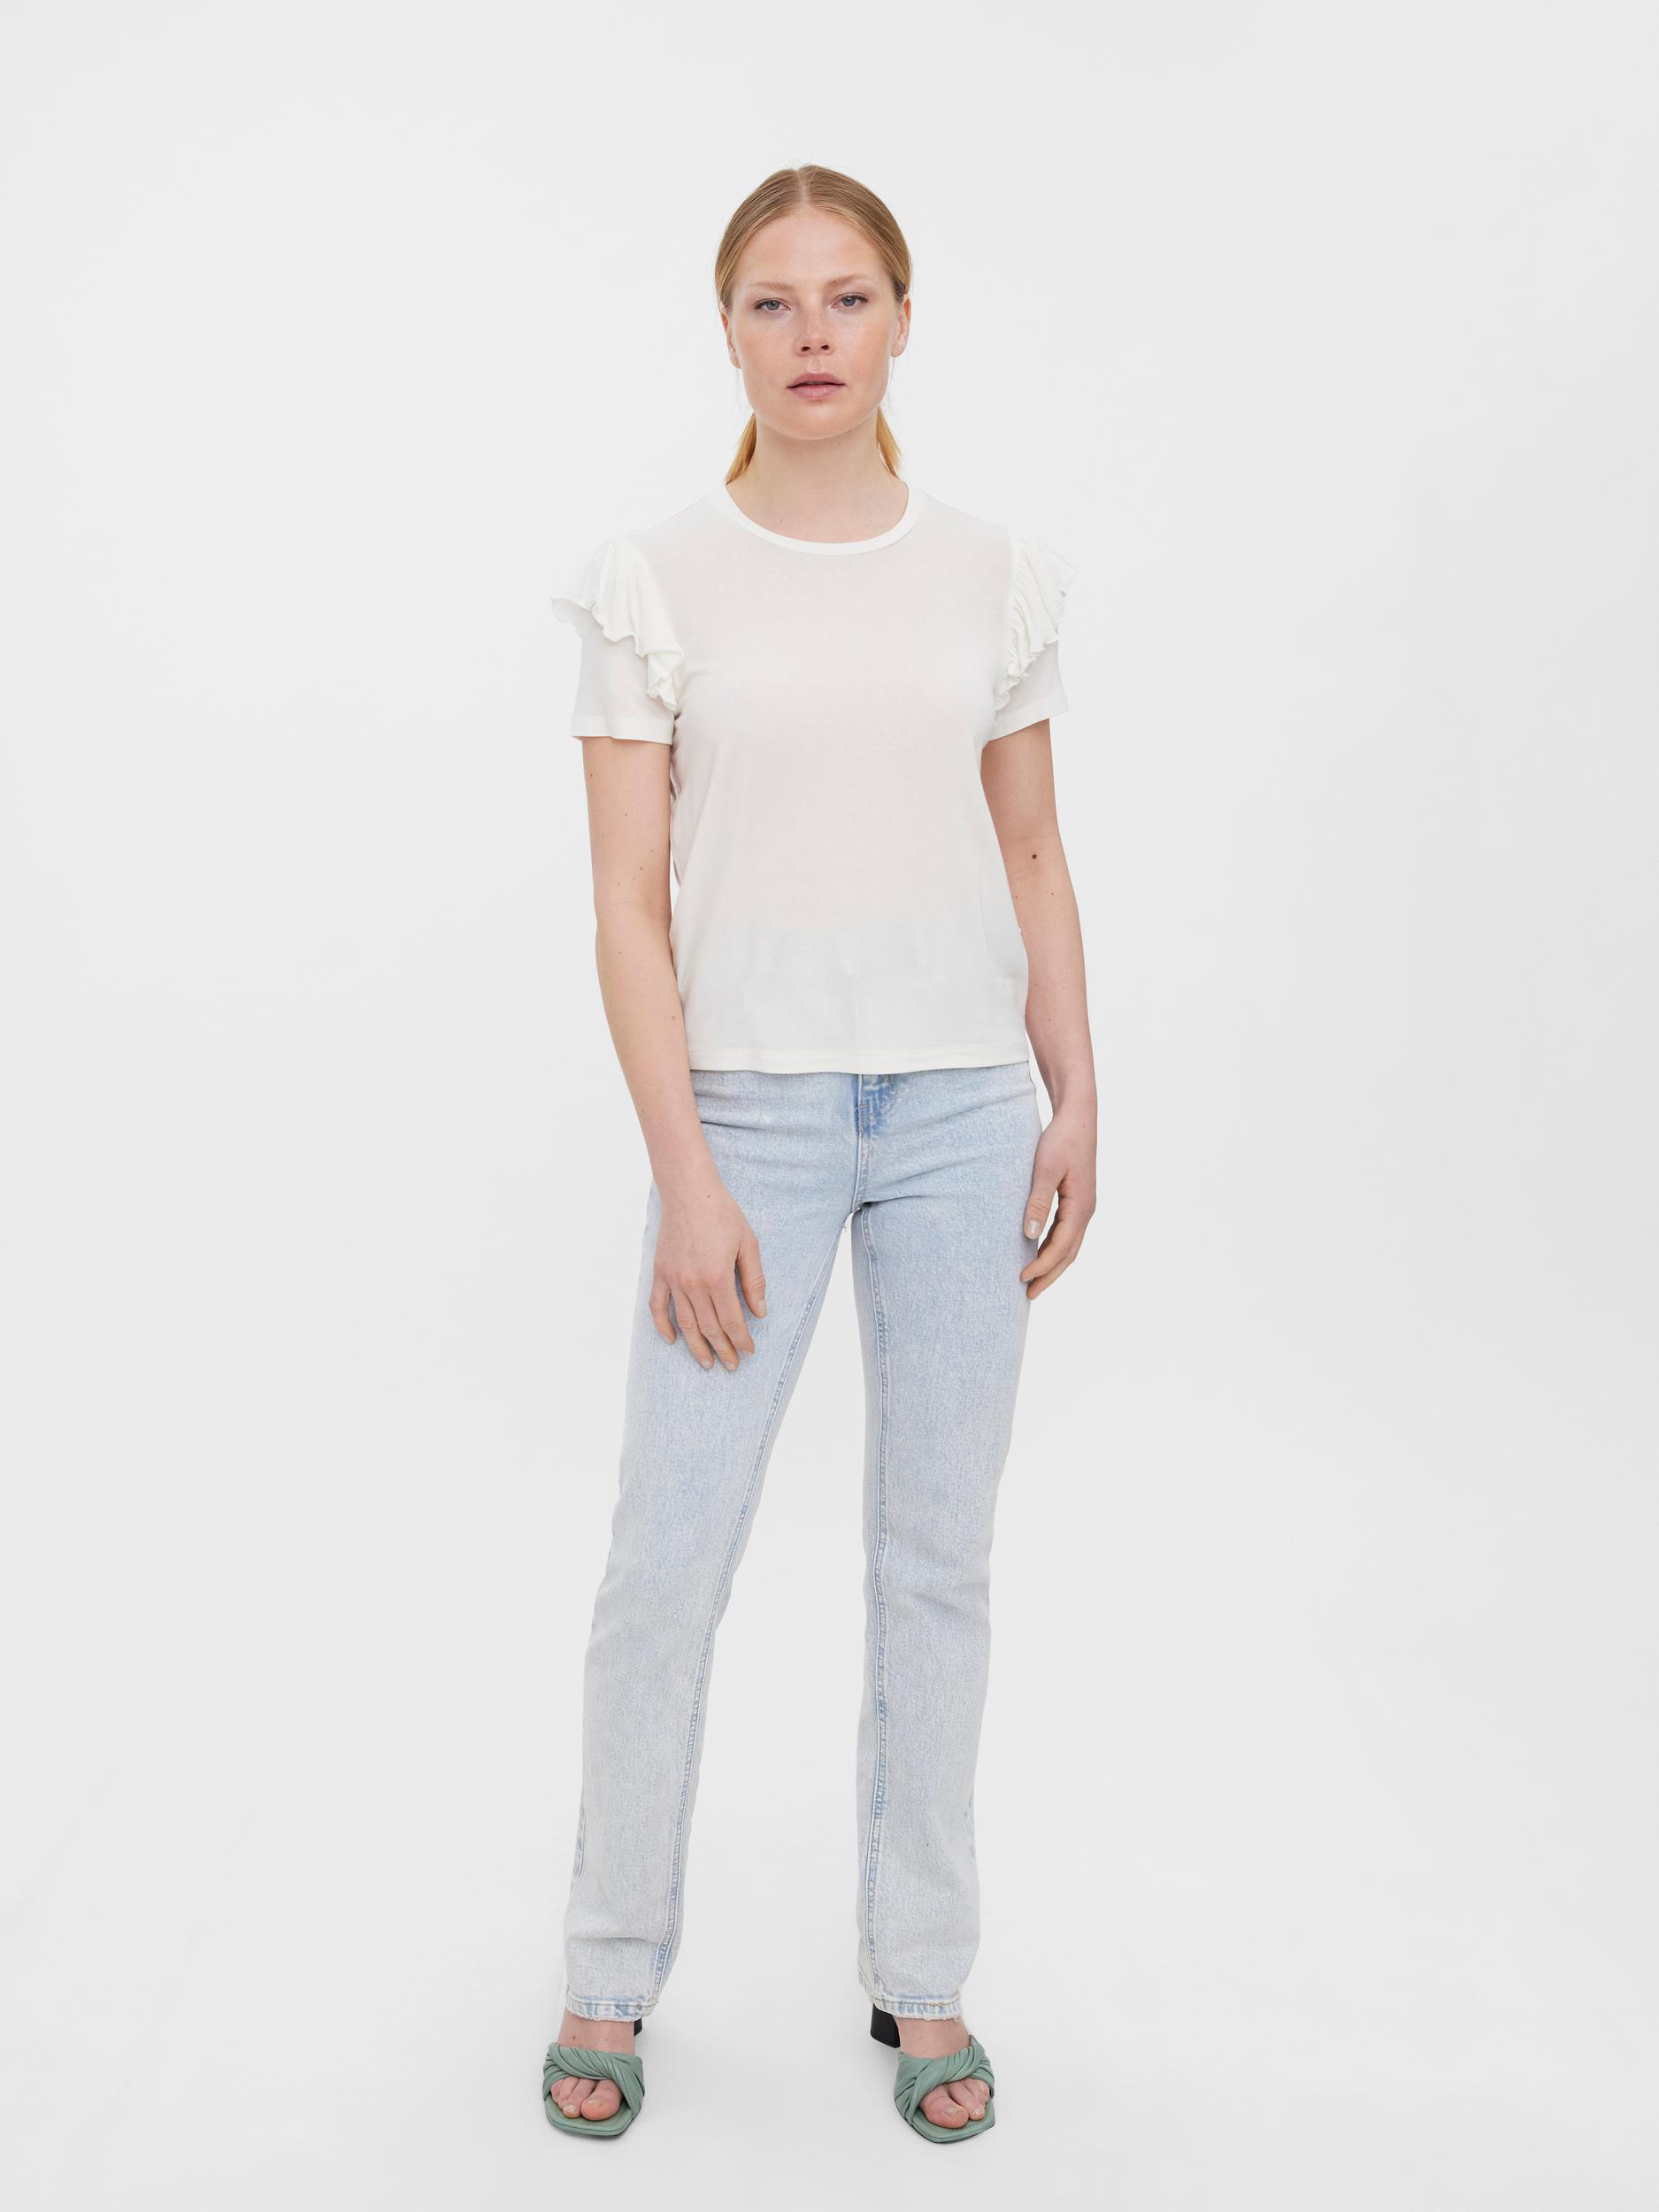 FINALE SALE - AWARE | Tamara frill t-shirt, SNOW WHITE, large